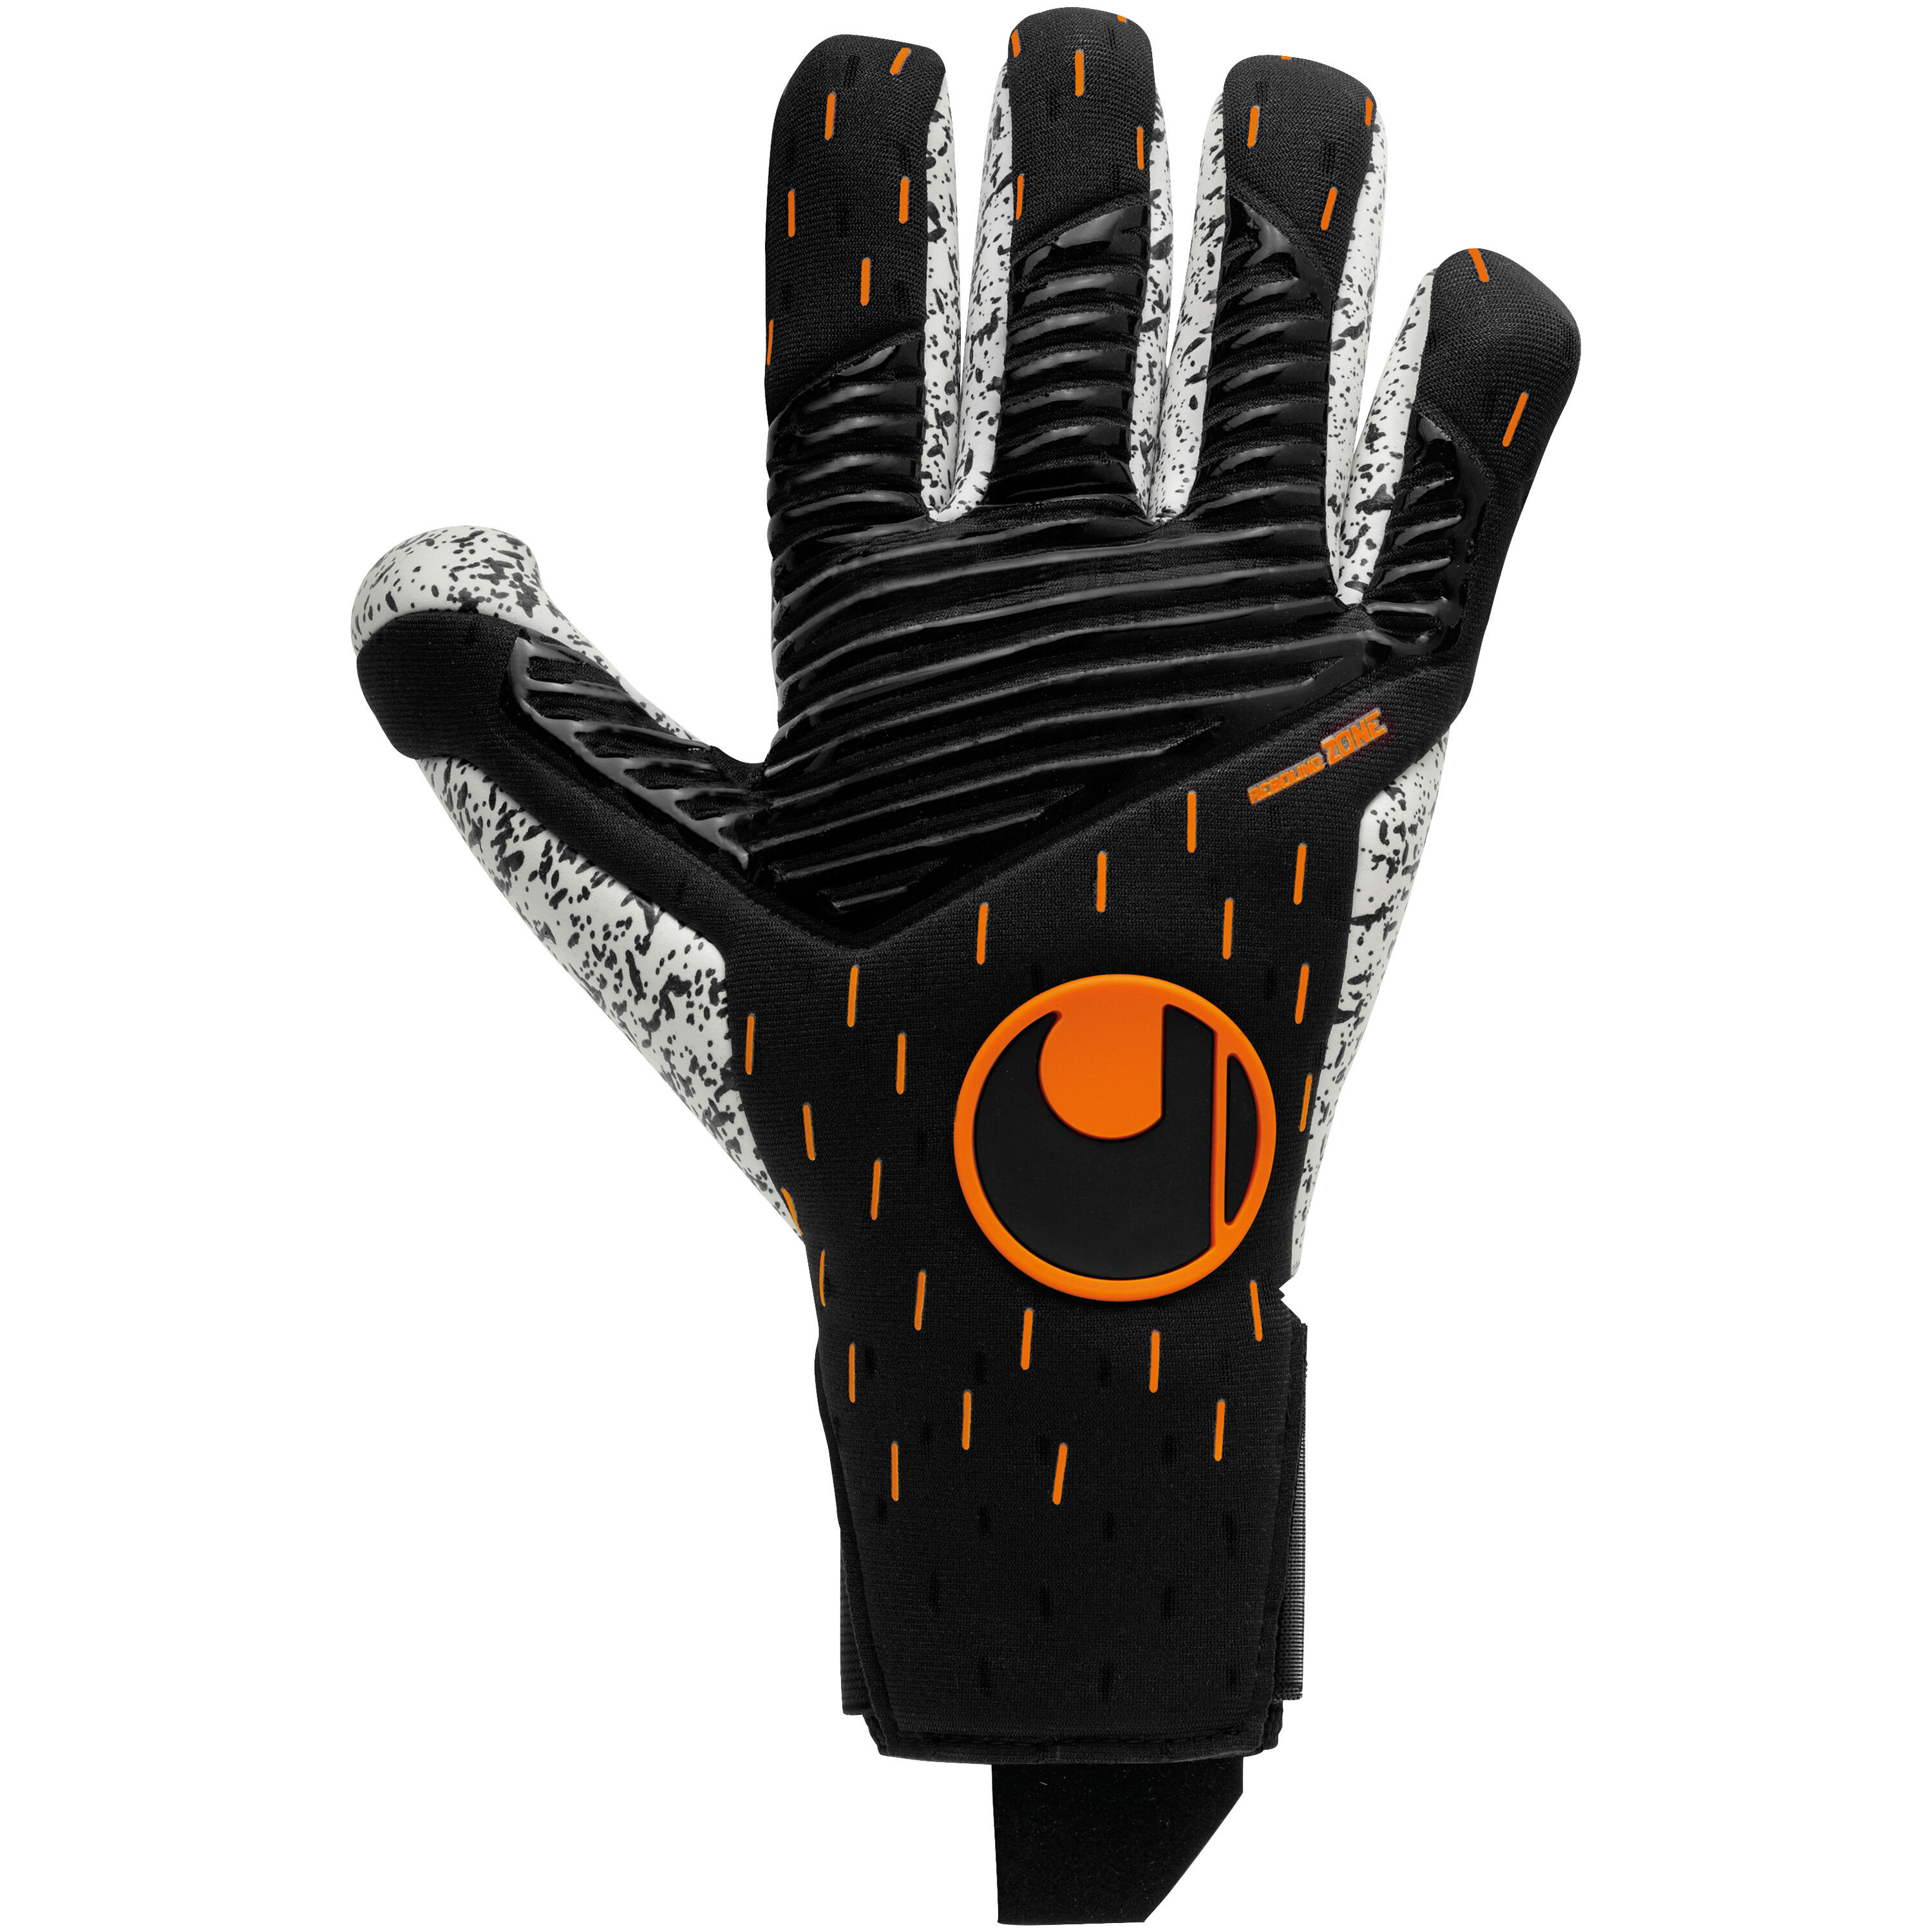 Uhlsport Speed Contact Supergrip+ Finger Surround  Goalkeeper Gloves 1/4